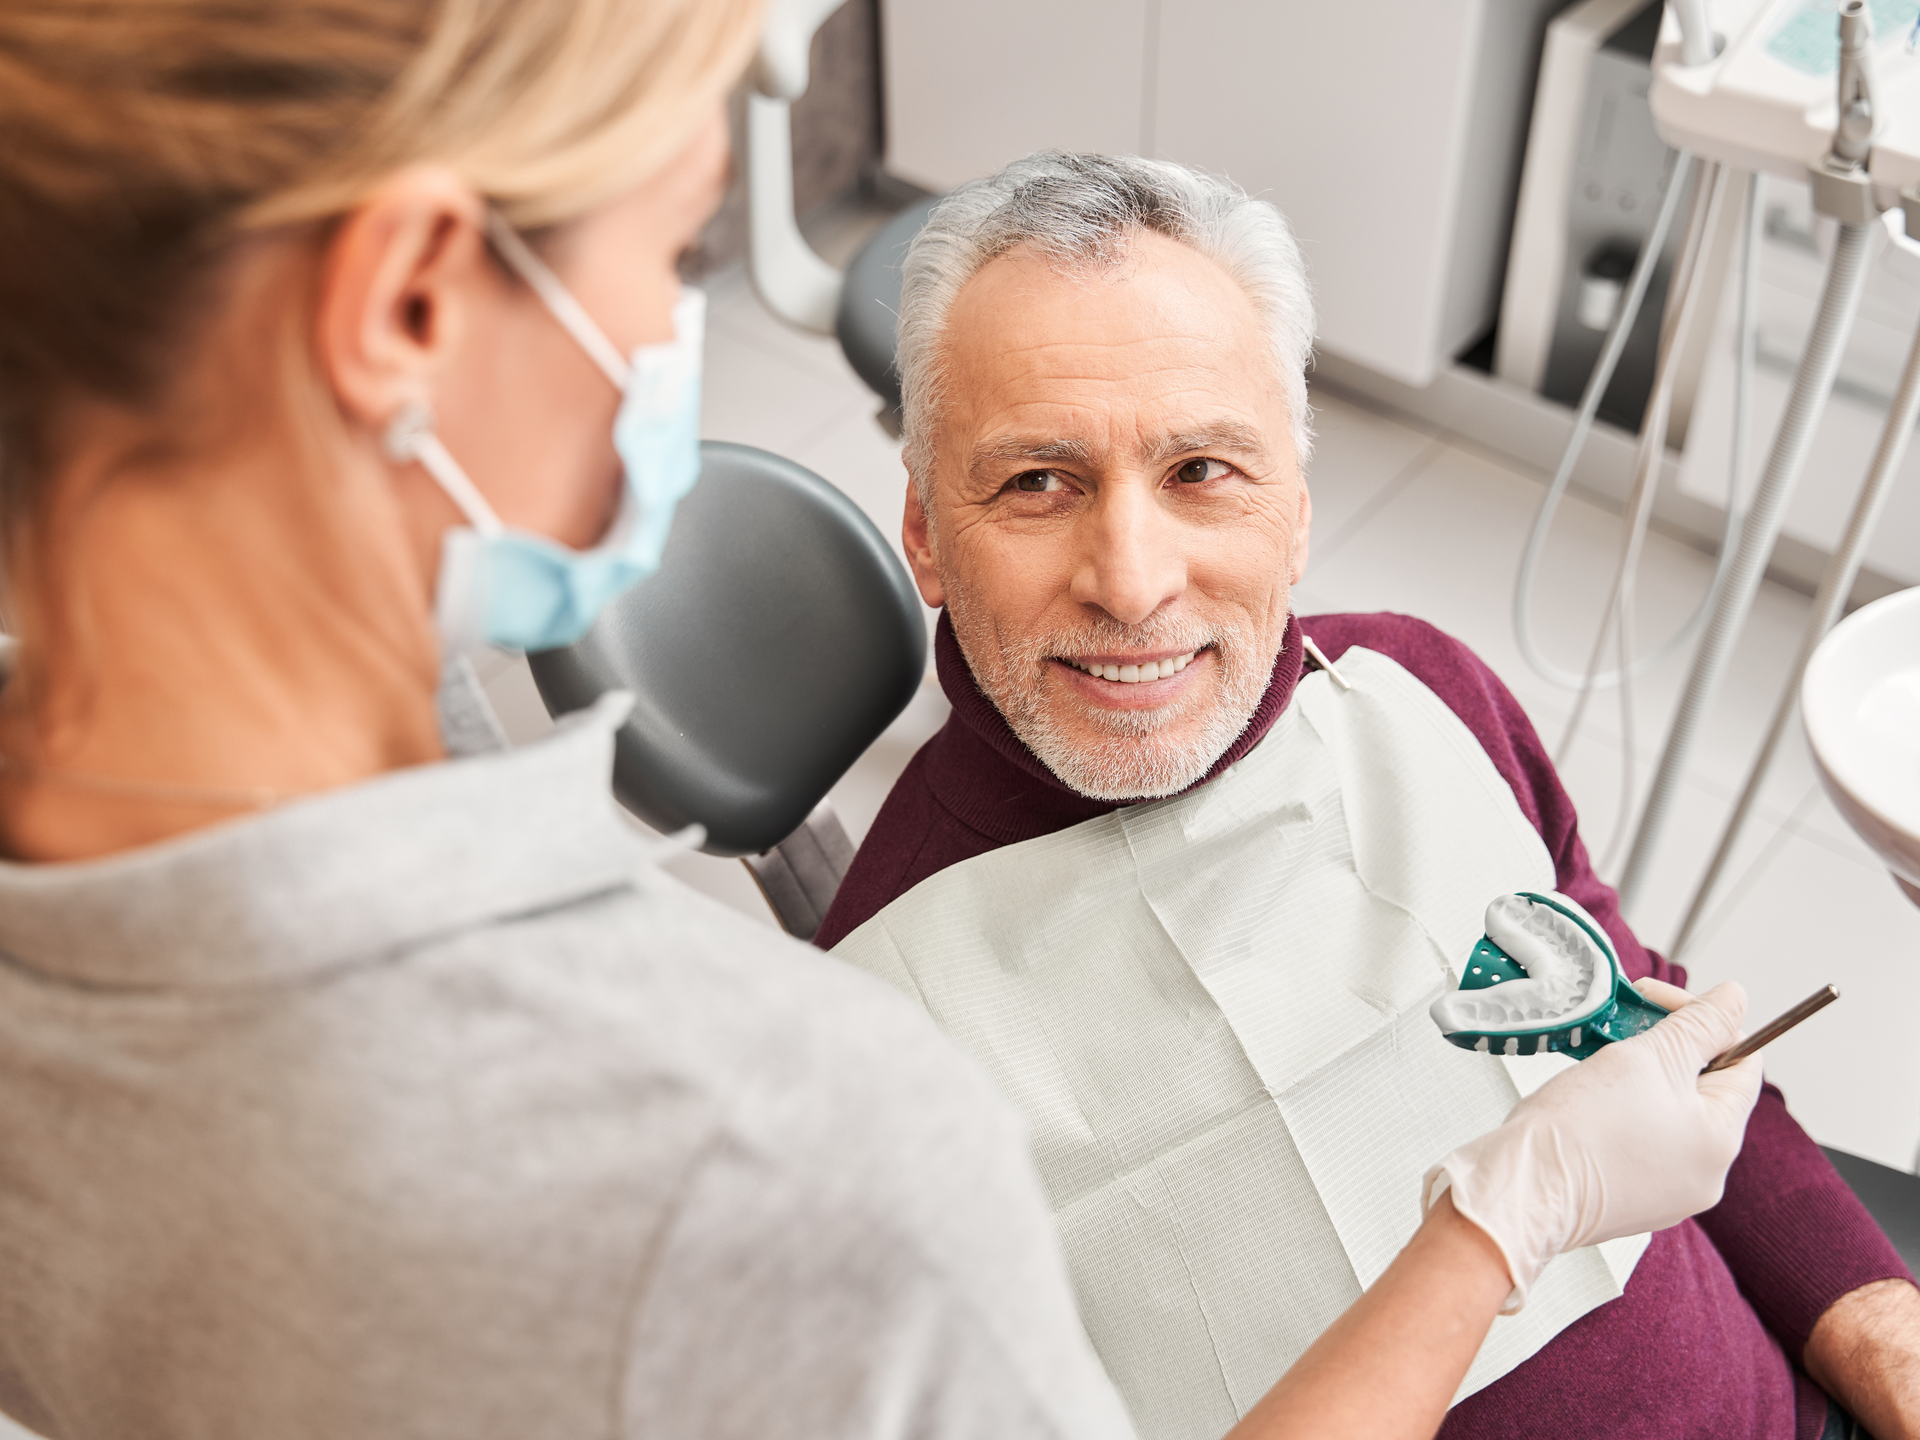 A man is sitting in a dental chair while a dentist examines his teeth .